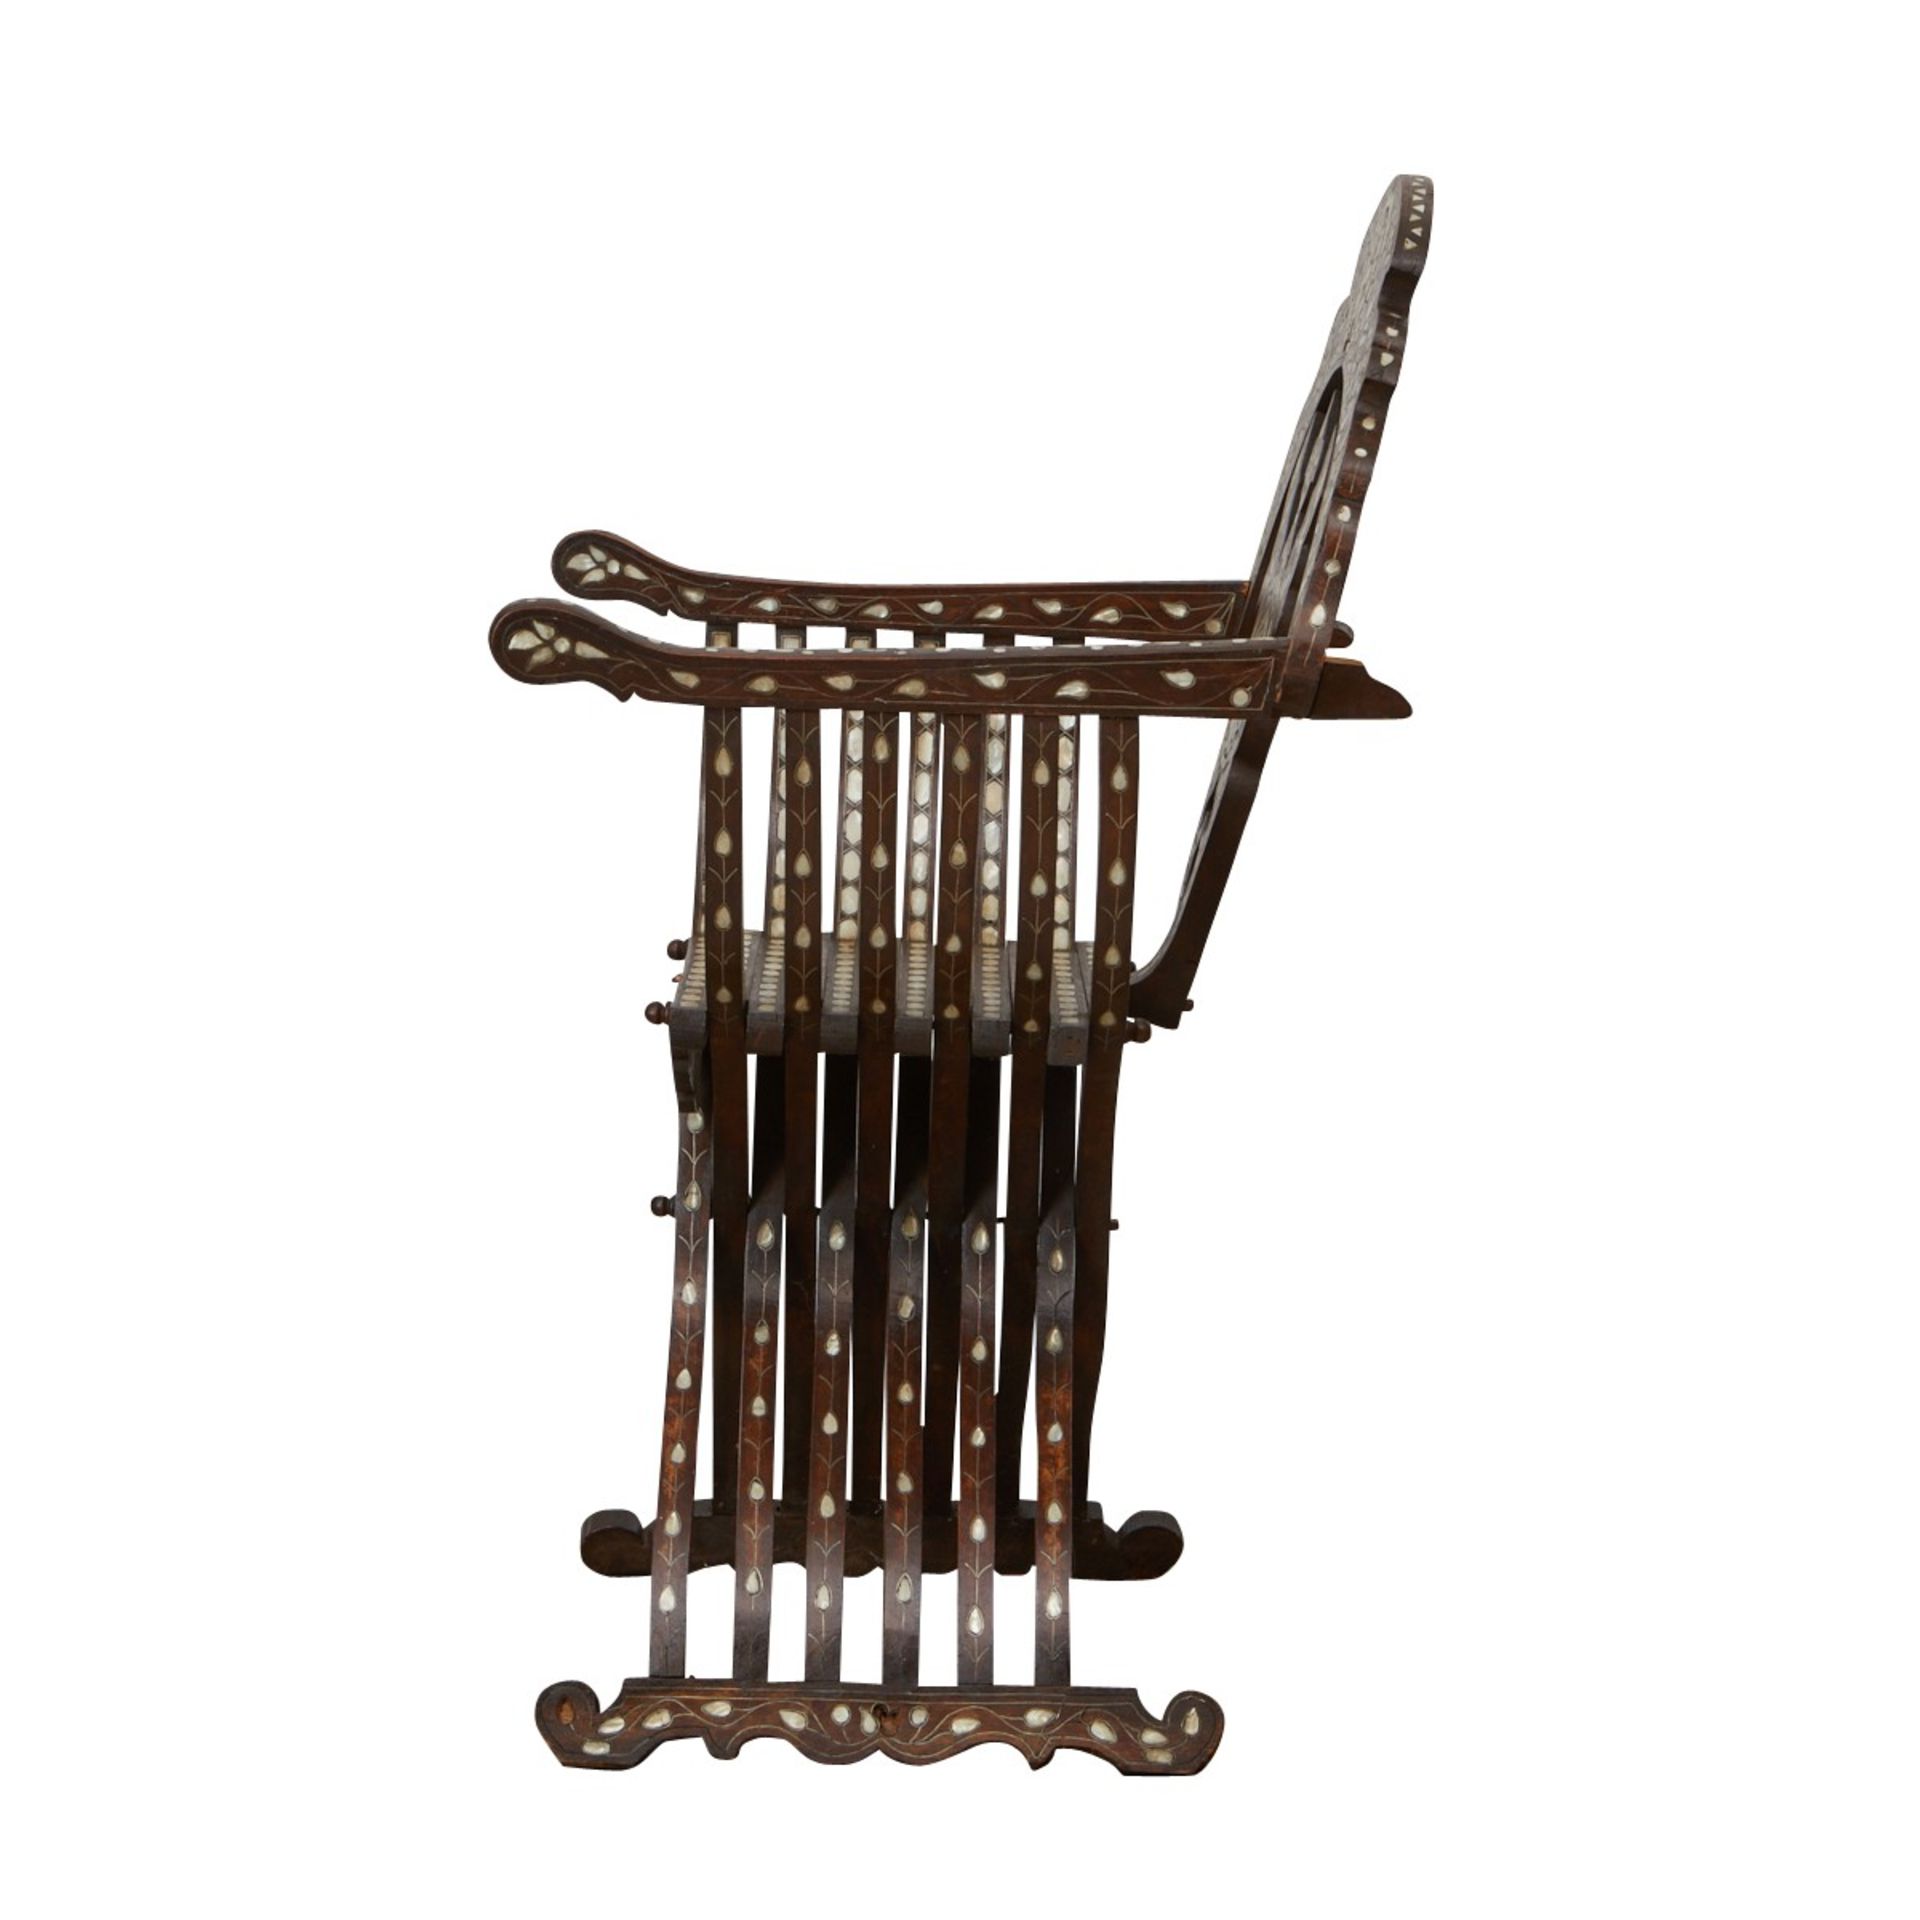 Syrian Inlaid Dagobert Folding Chair - Image 3 of 9